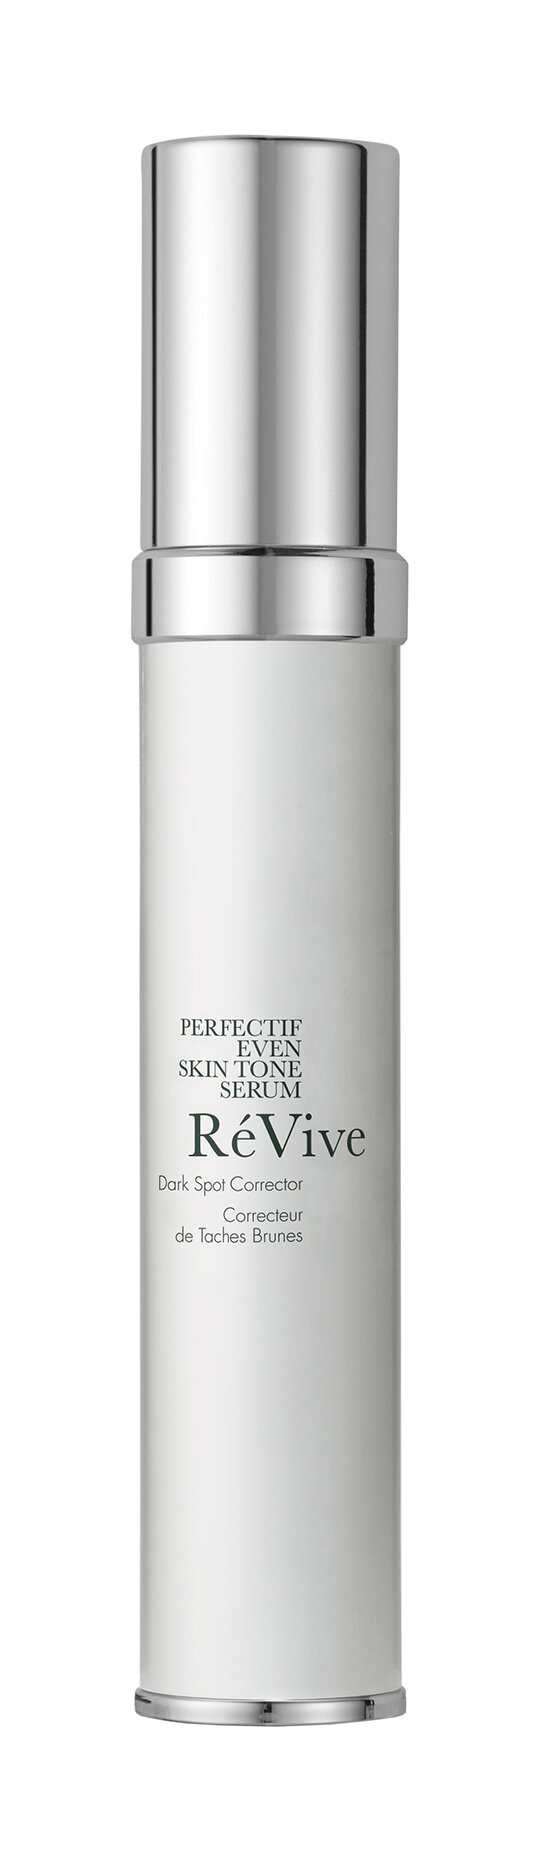 REVIVE Perfectif Even Skin Tone Serum Сыворотка для лица совершенствующая тон кожи, 30 мл